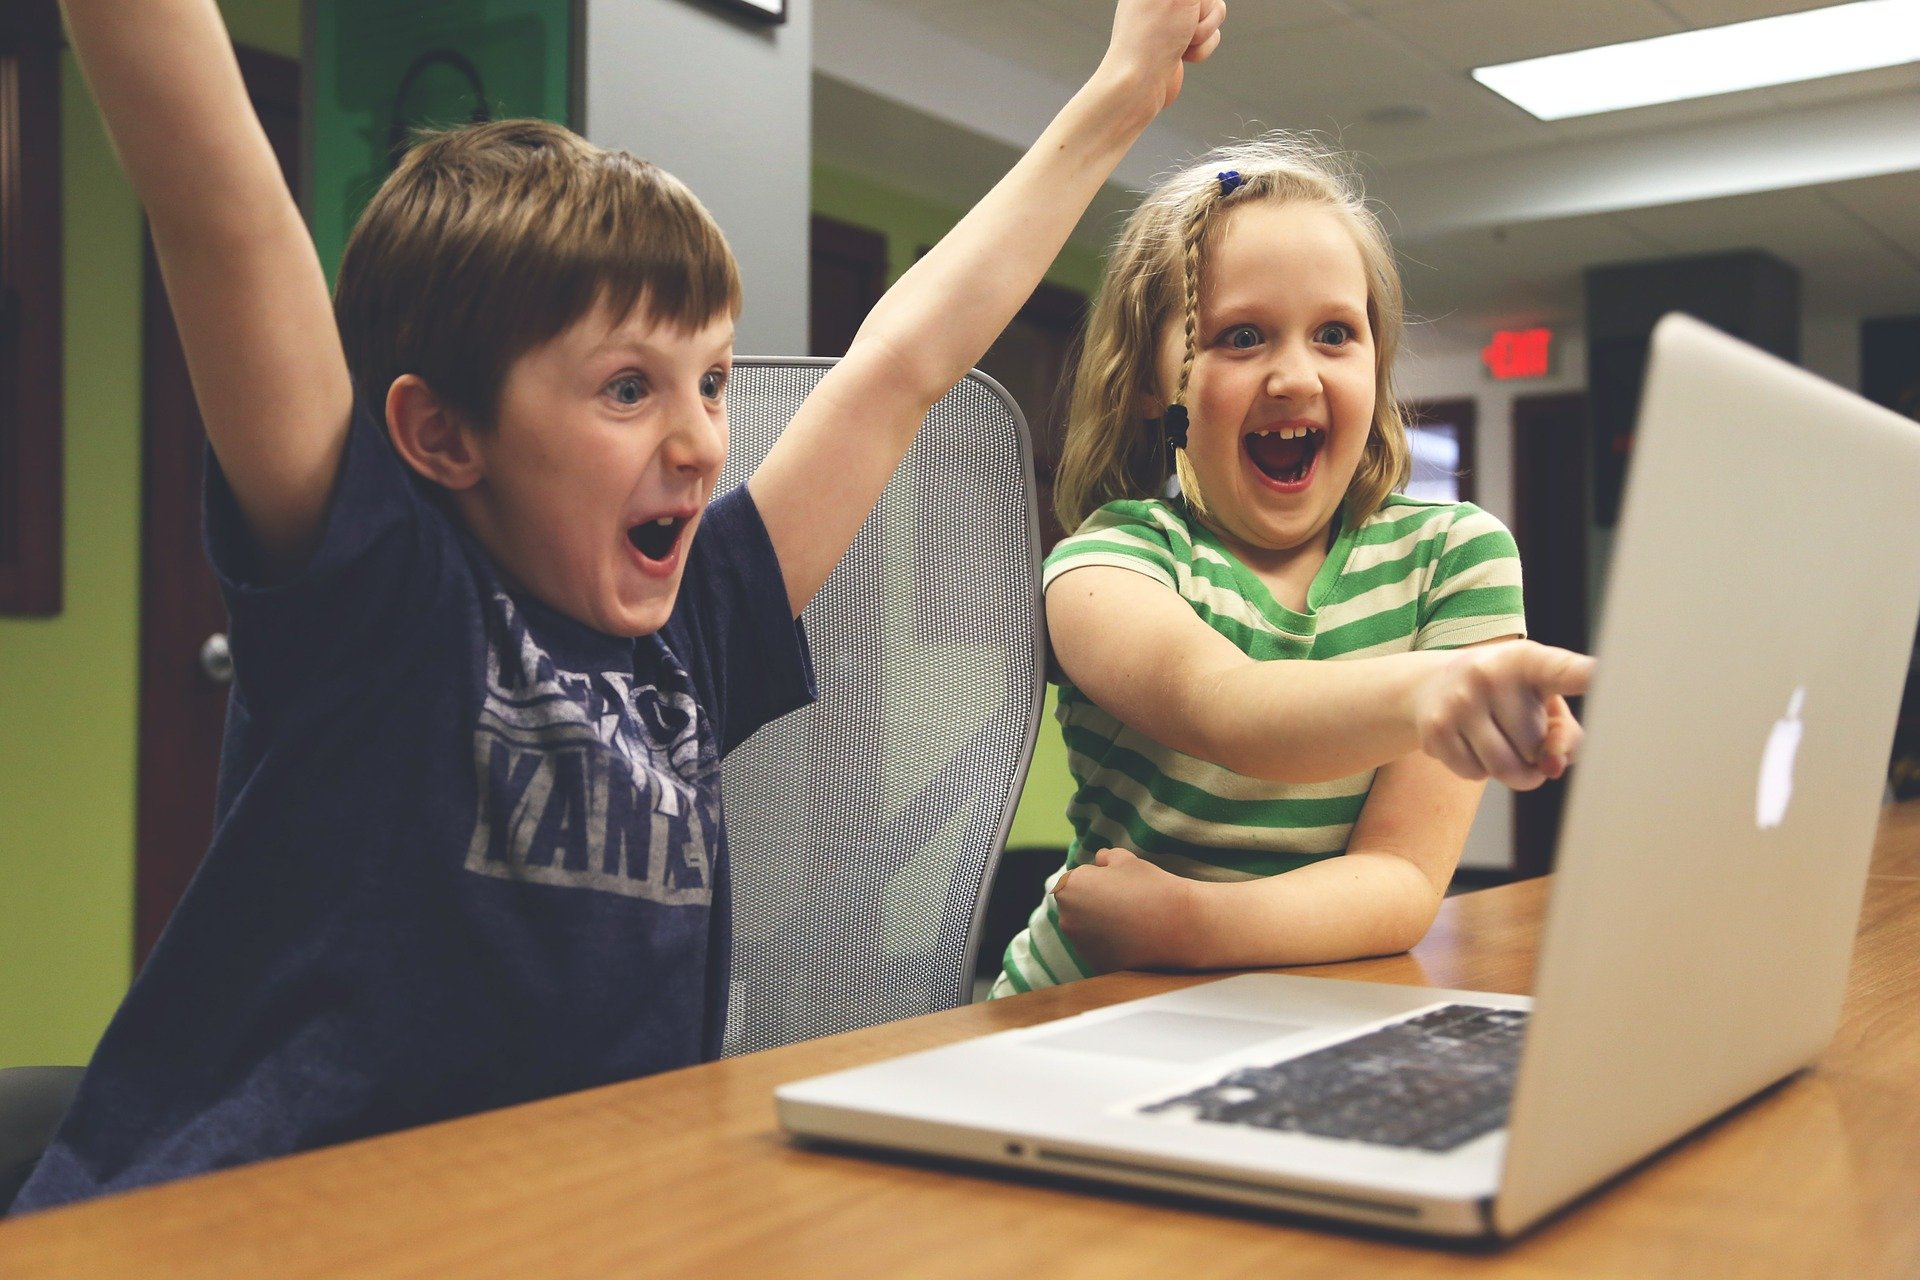 Children on computer excited